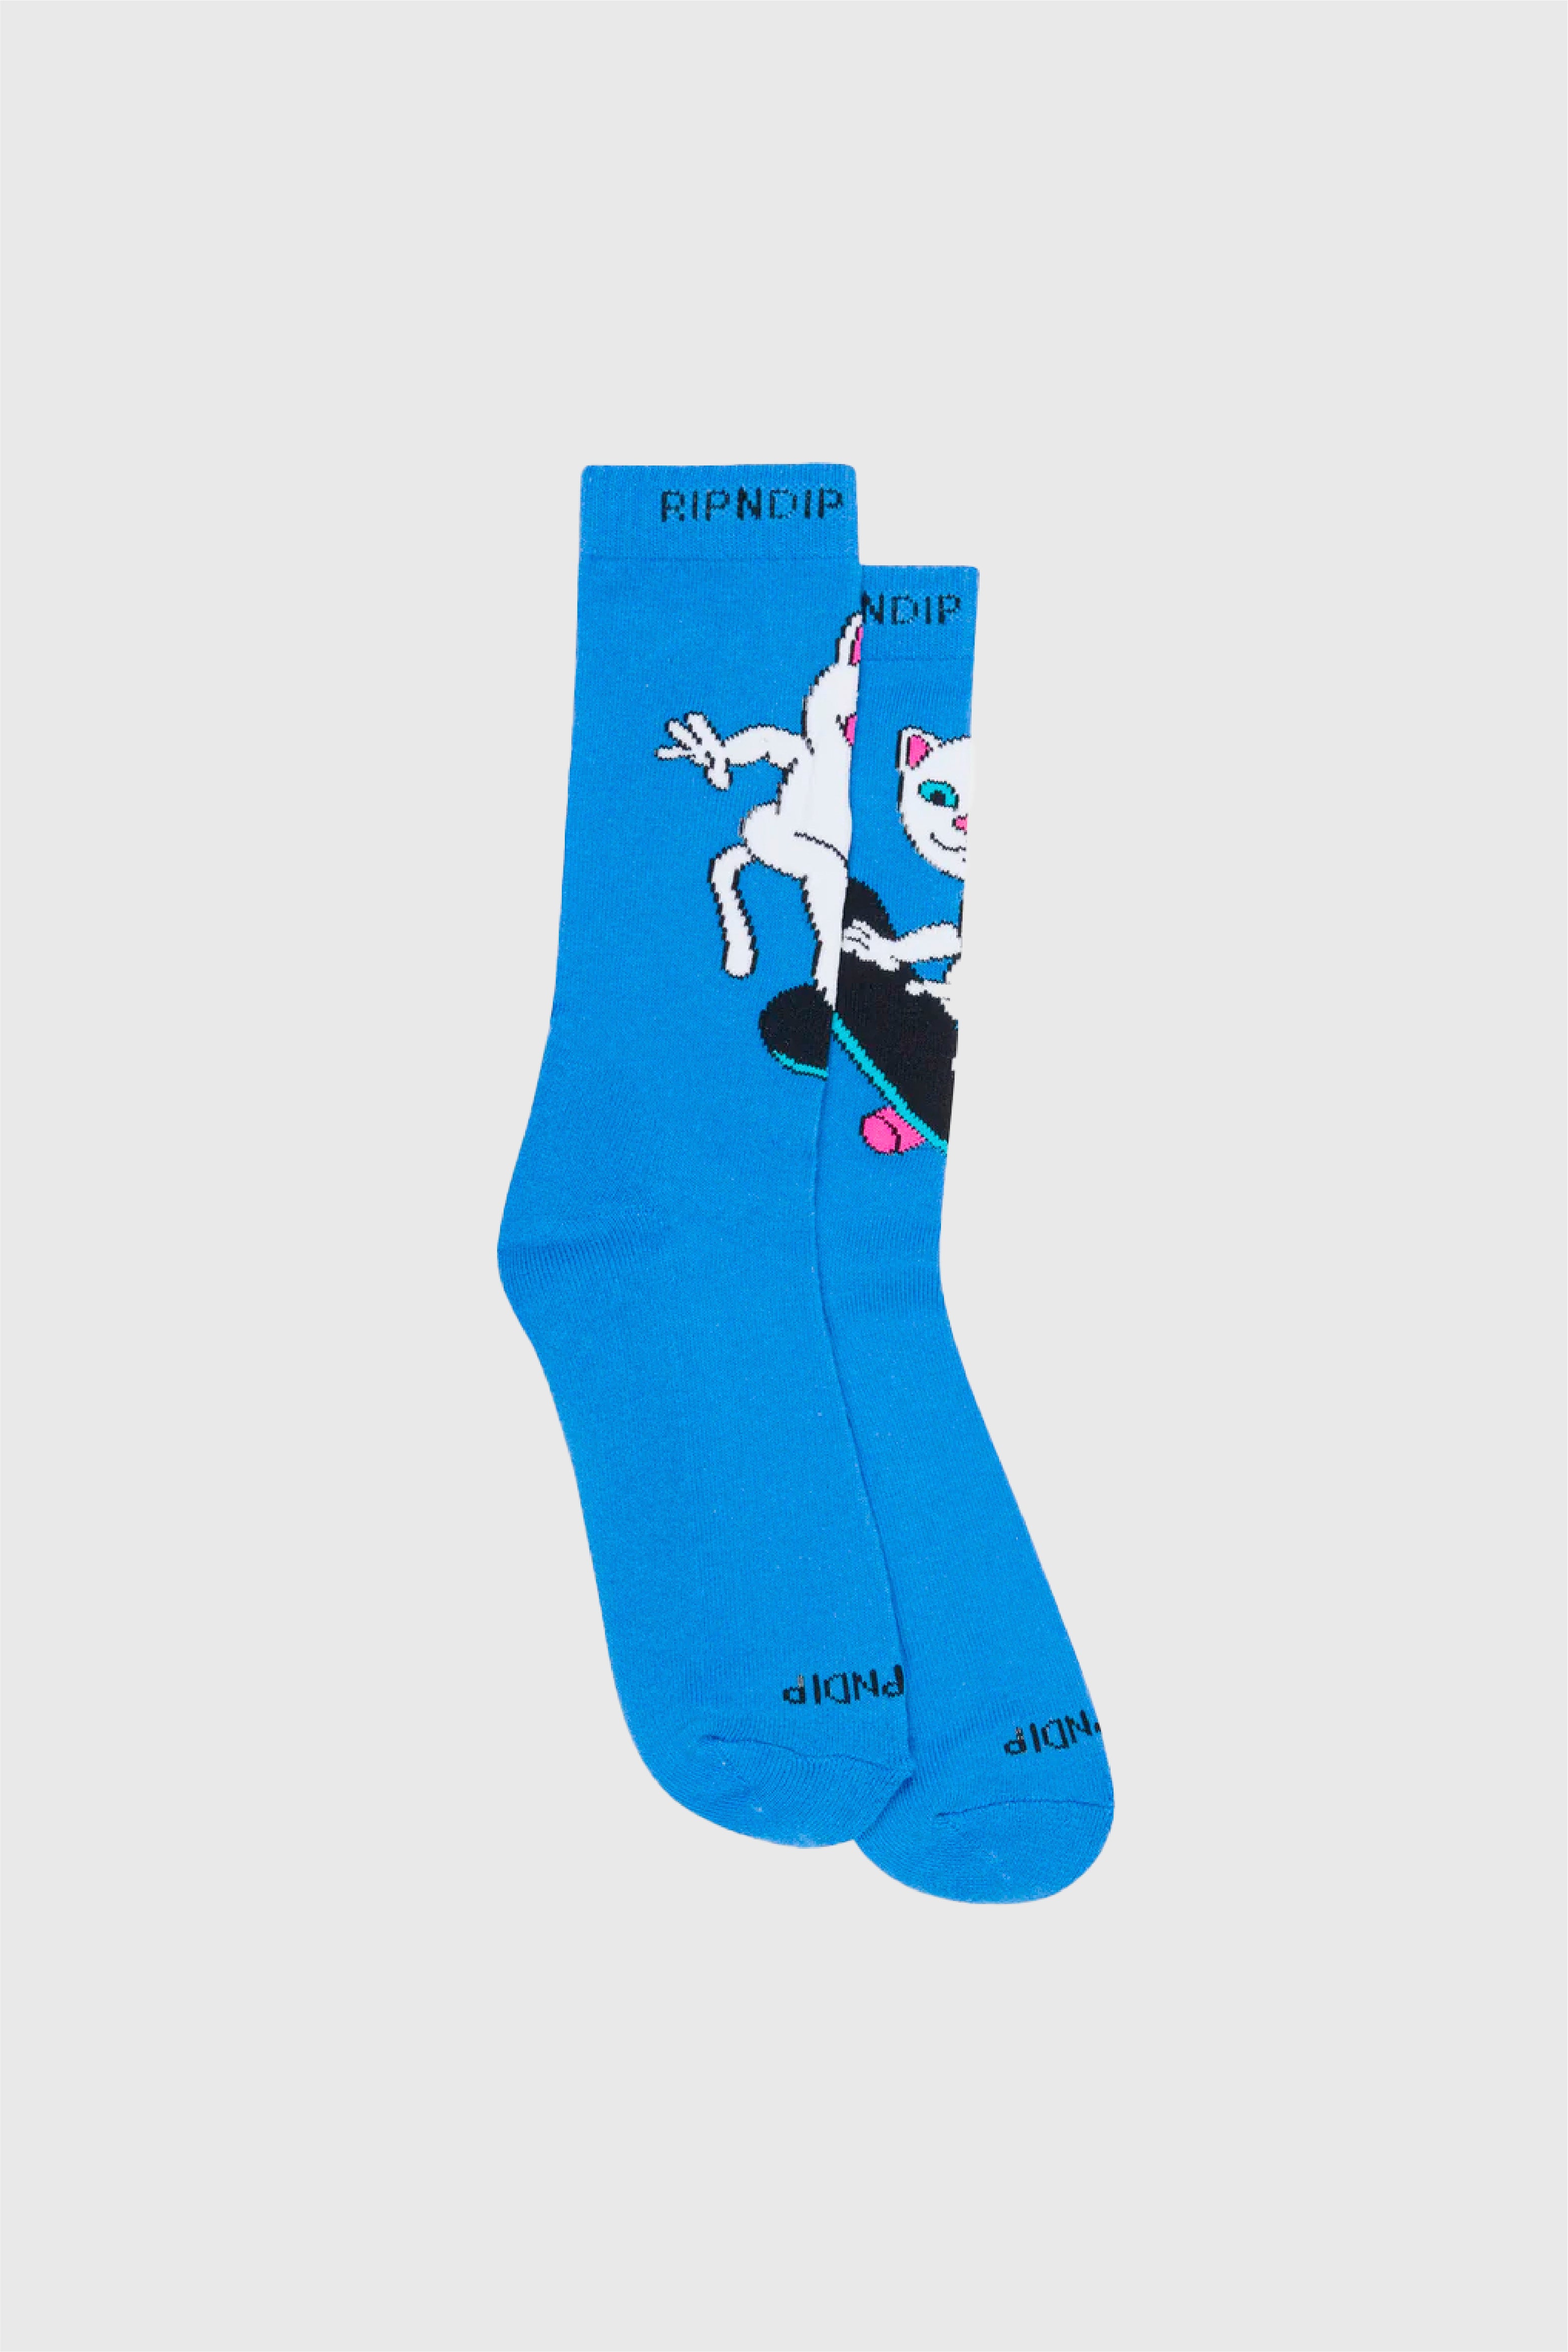 Selectshop FRAME - RIPNDIP Skater Nerm Socks All-Accessories Concept Store Dubai